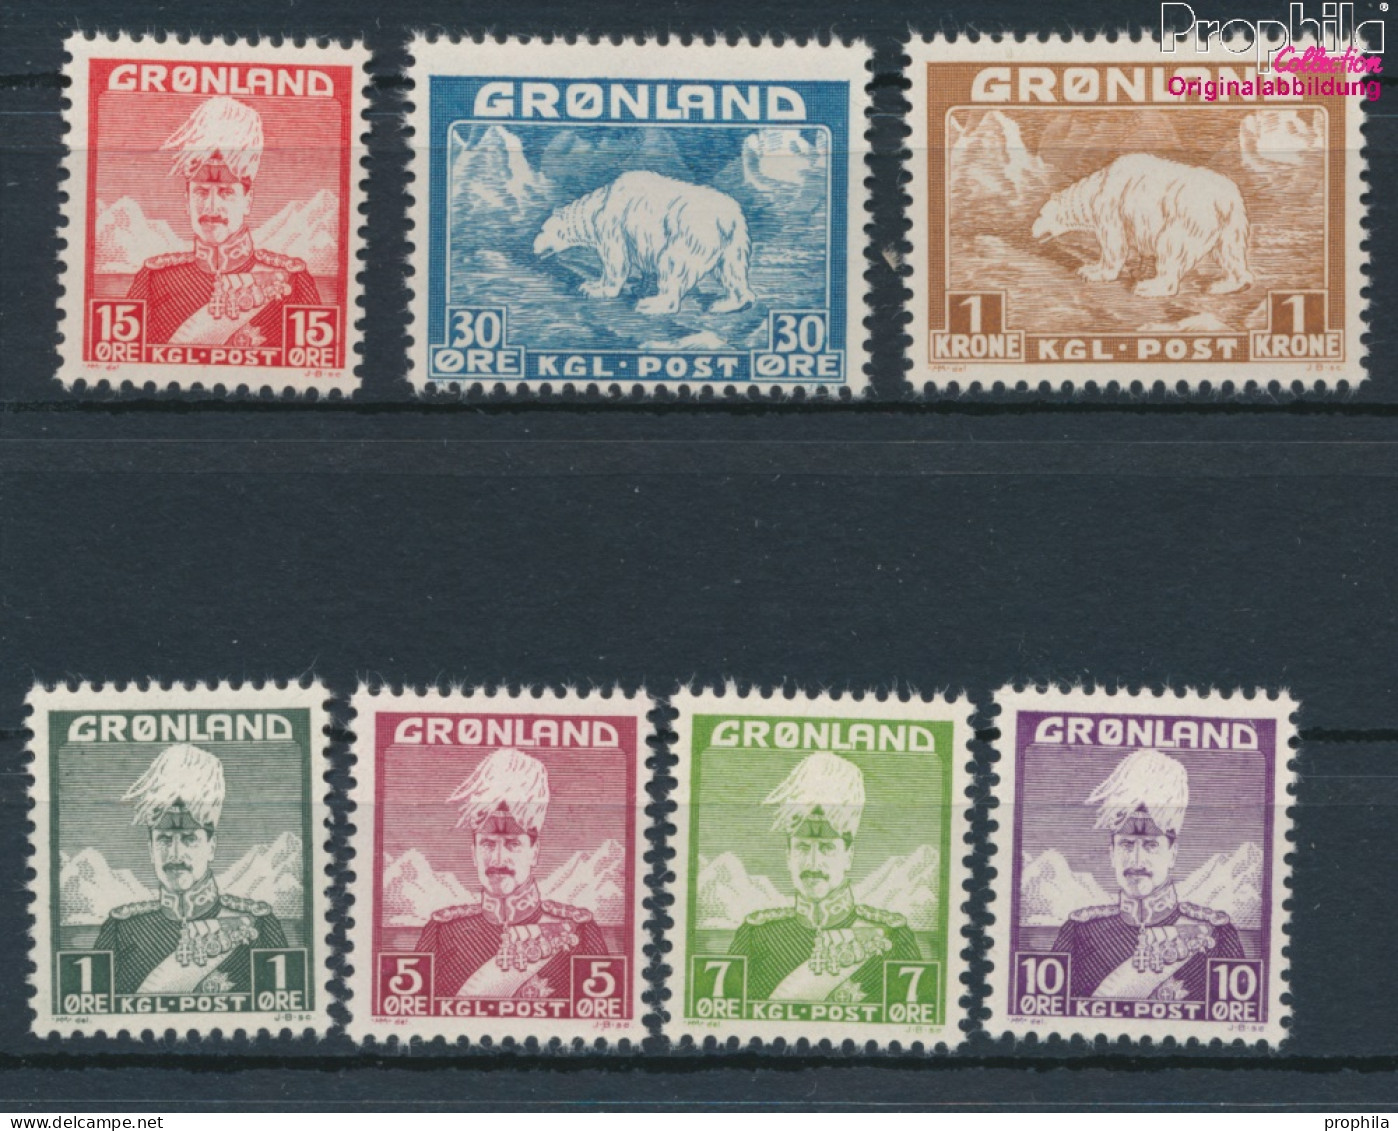 Dänemark - Grönland Postfrisch Christian X. 1938 König Christian X.  (10174225 - Used Stamps